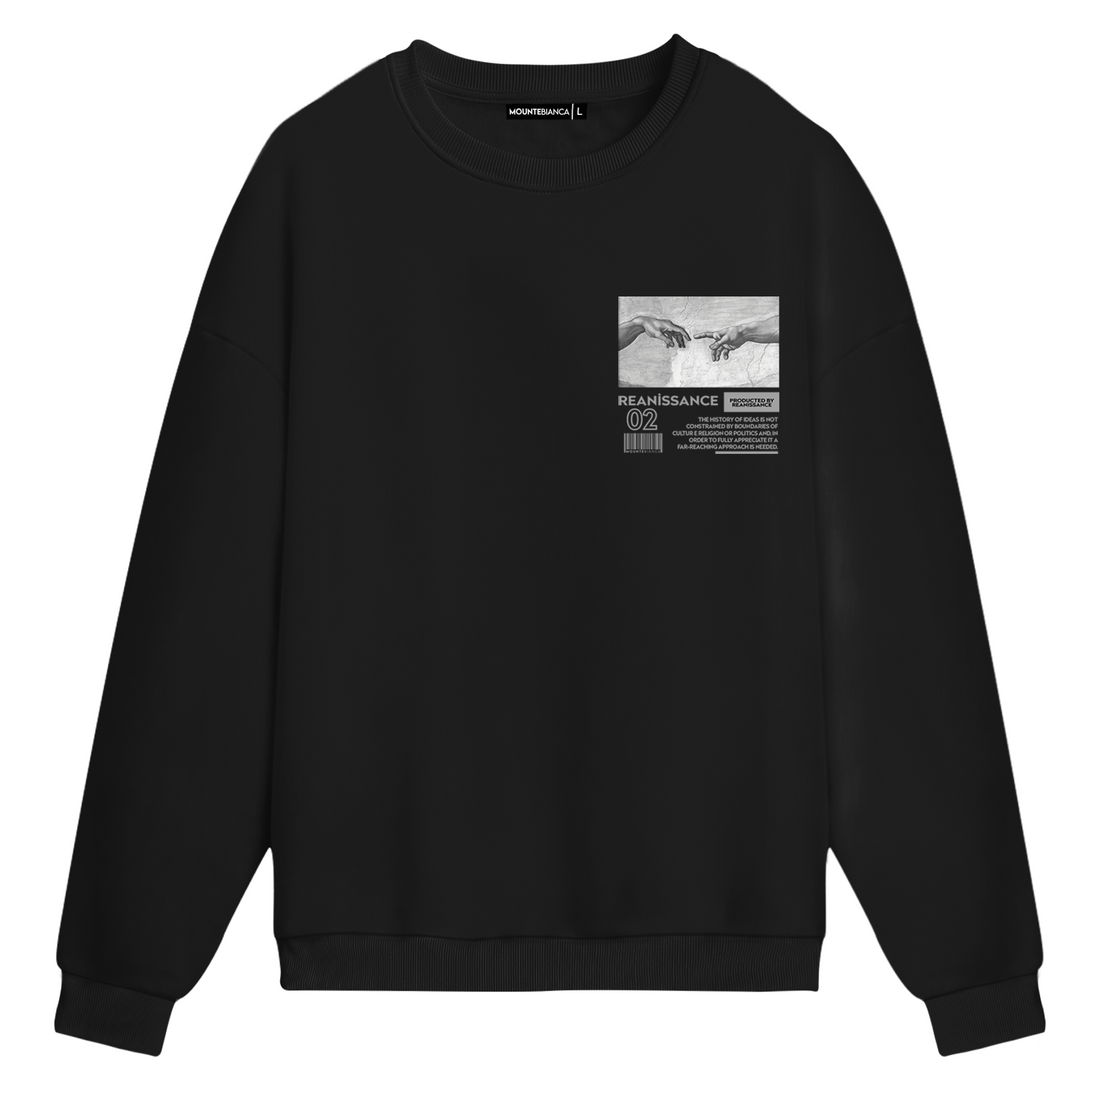 Renaissance - Sweatshirt